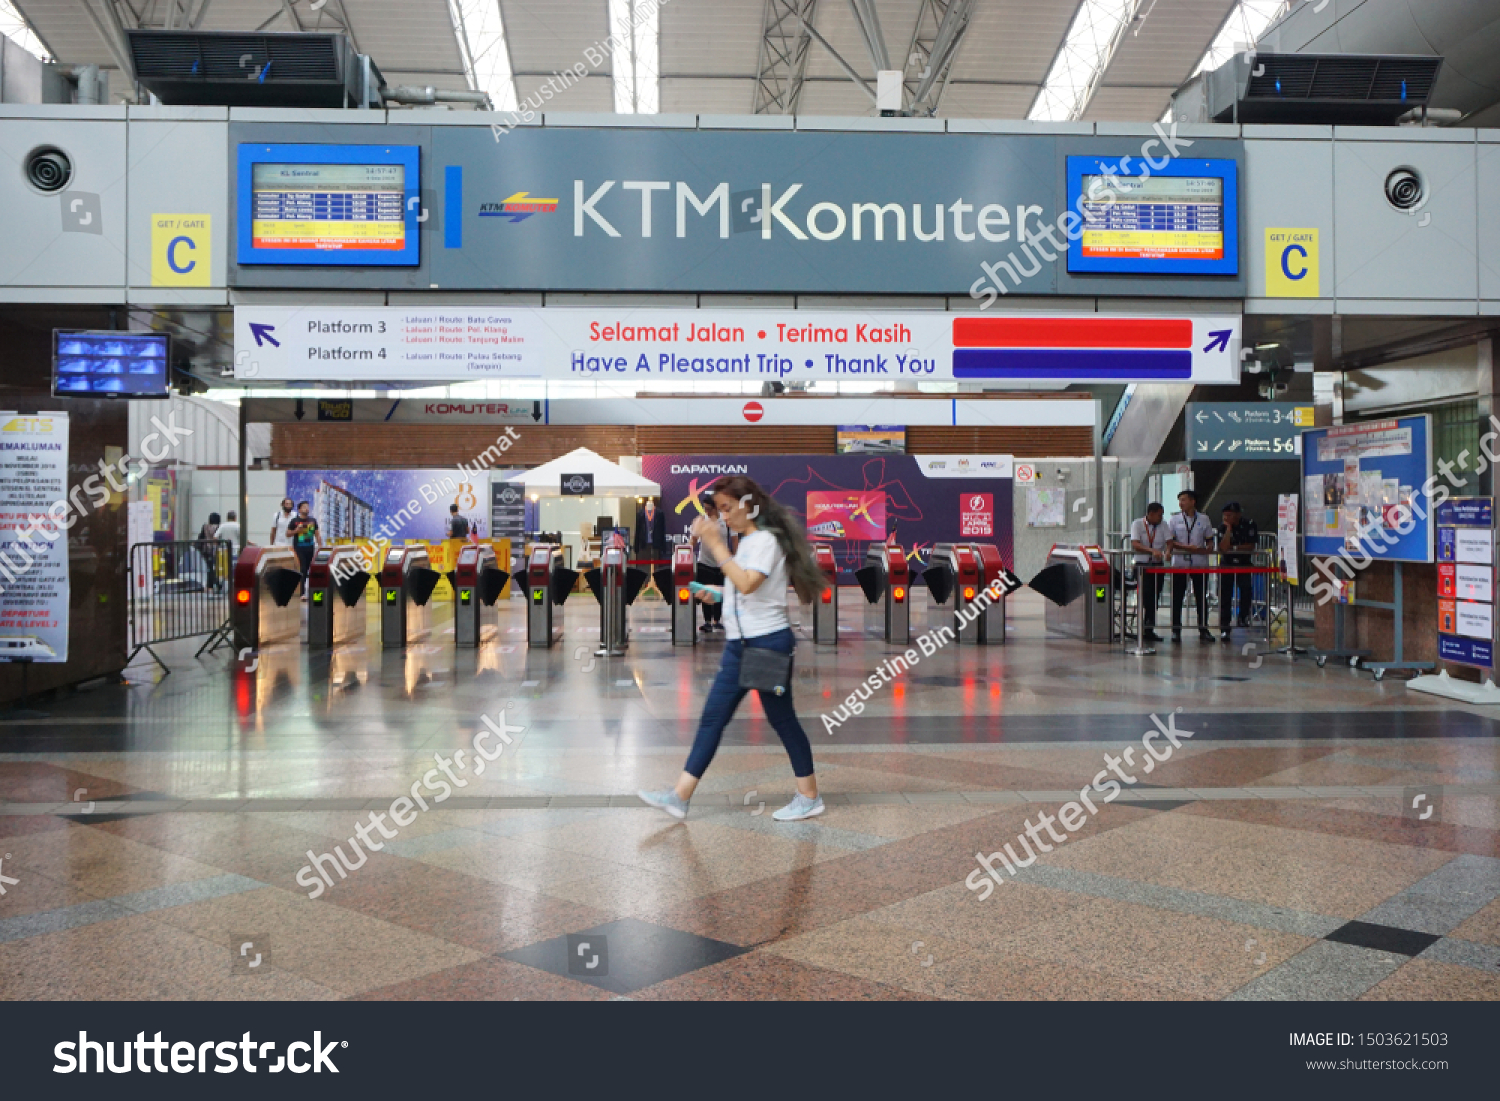 Kuala Lumpur Sept 132018 Facade Ktm Stock Photo Edit Now 1503621503